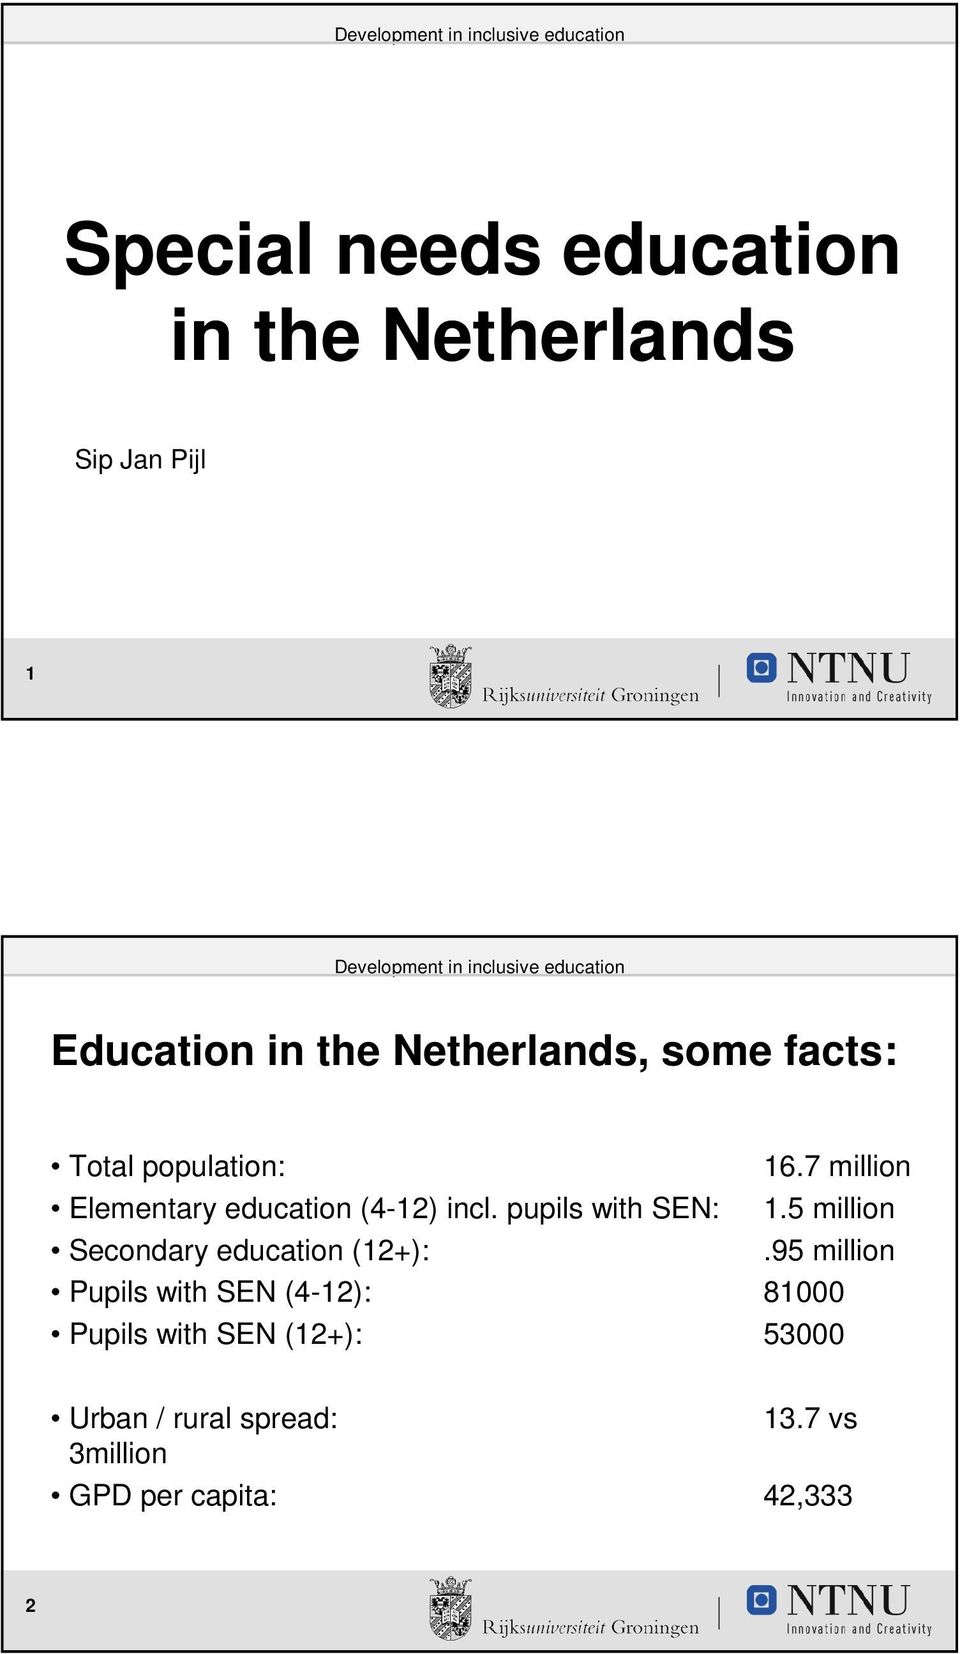 pupils with SEN: 1.5 million Secondary education (12+):.